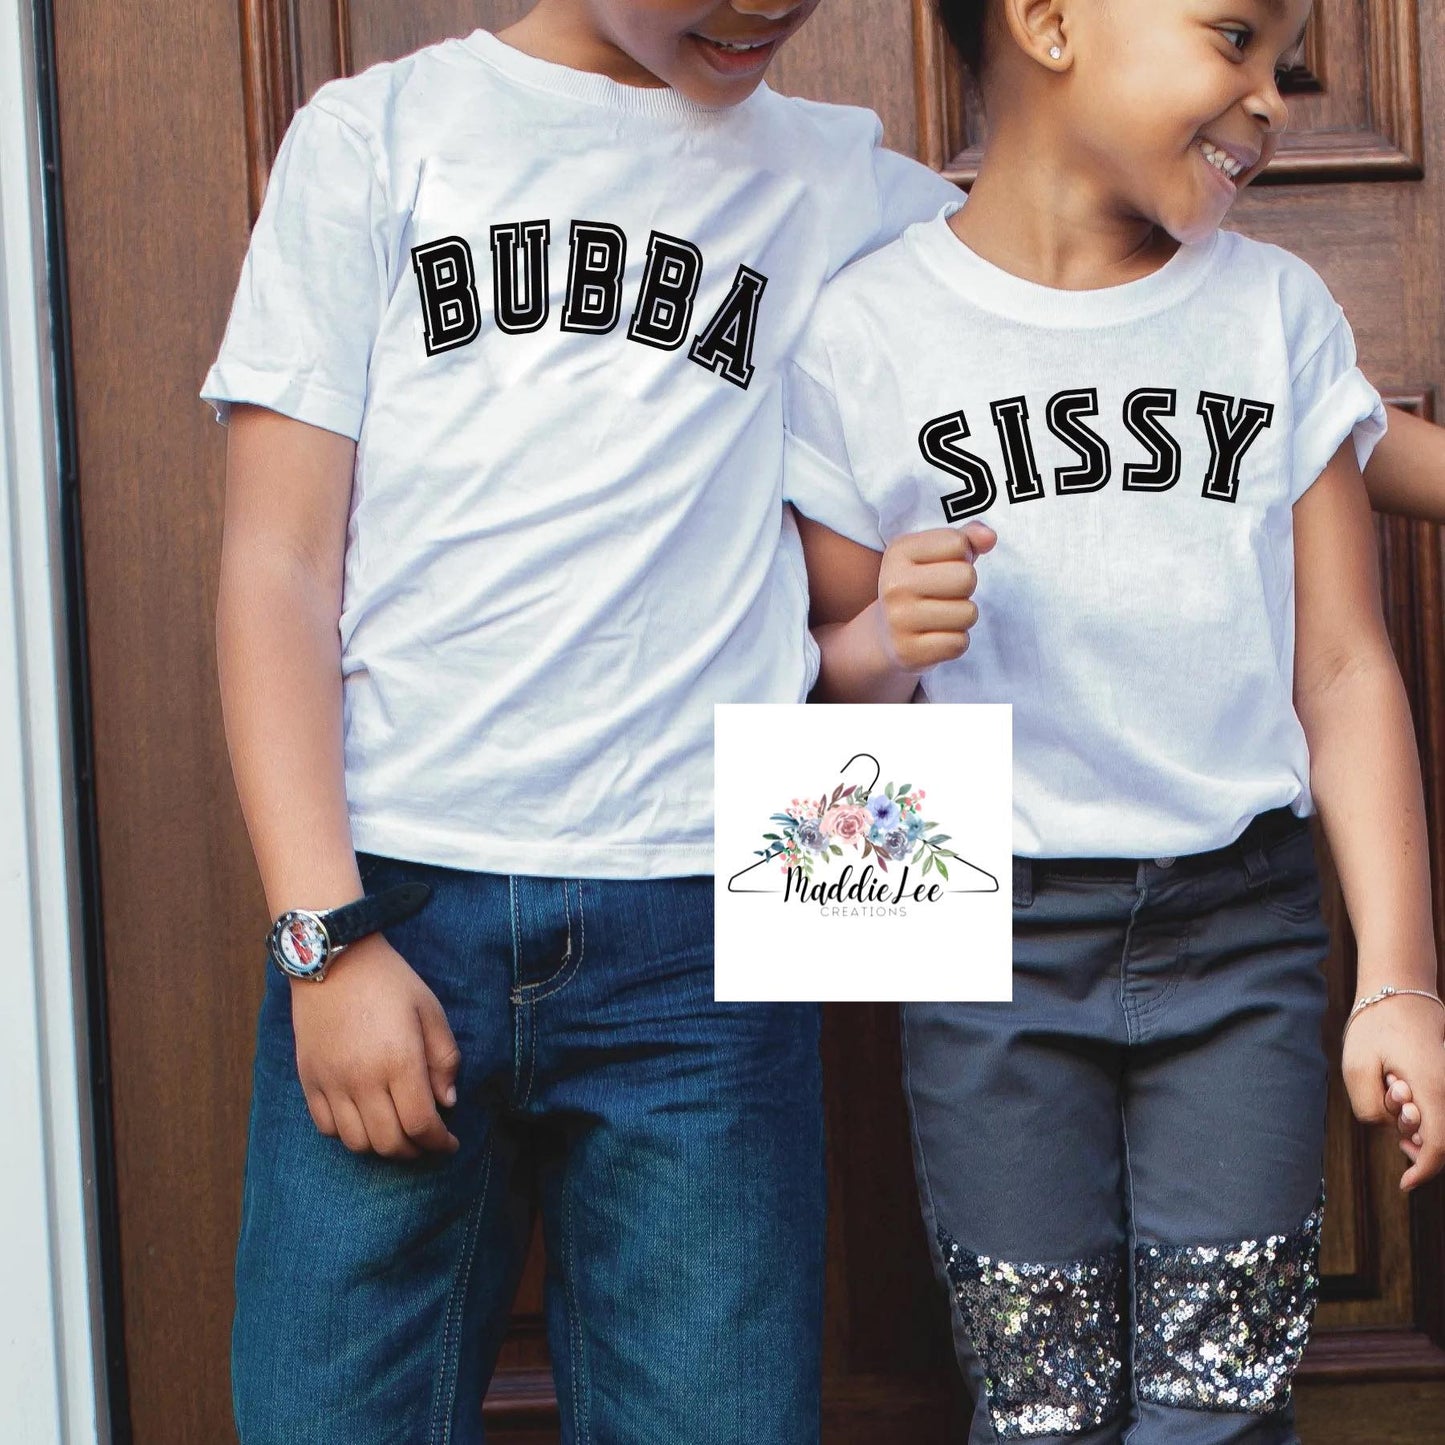 Bubba & Sissy Youth Tee